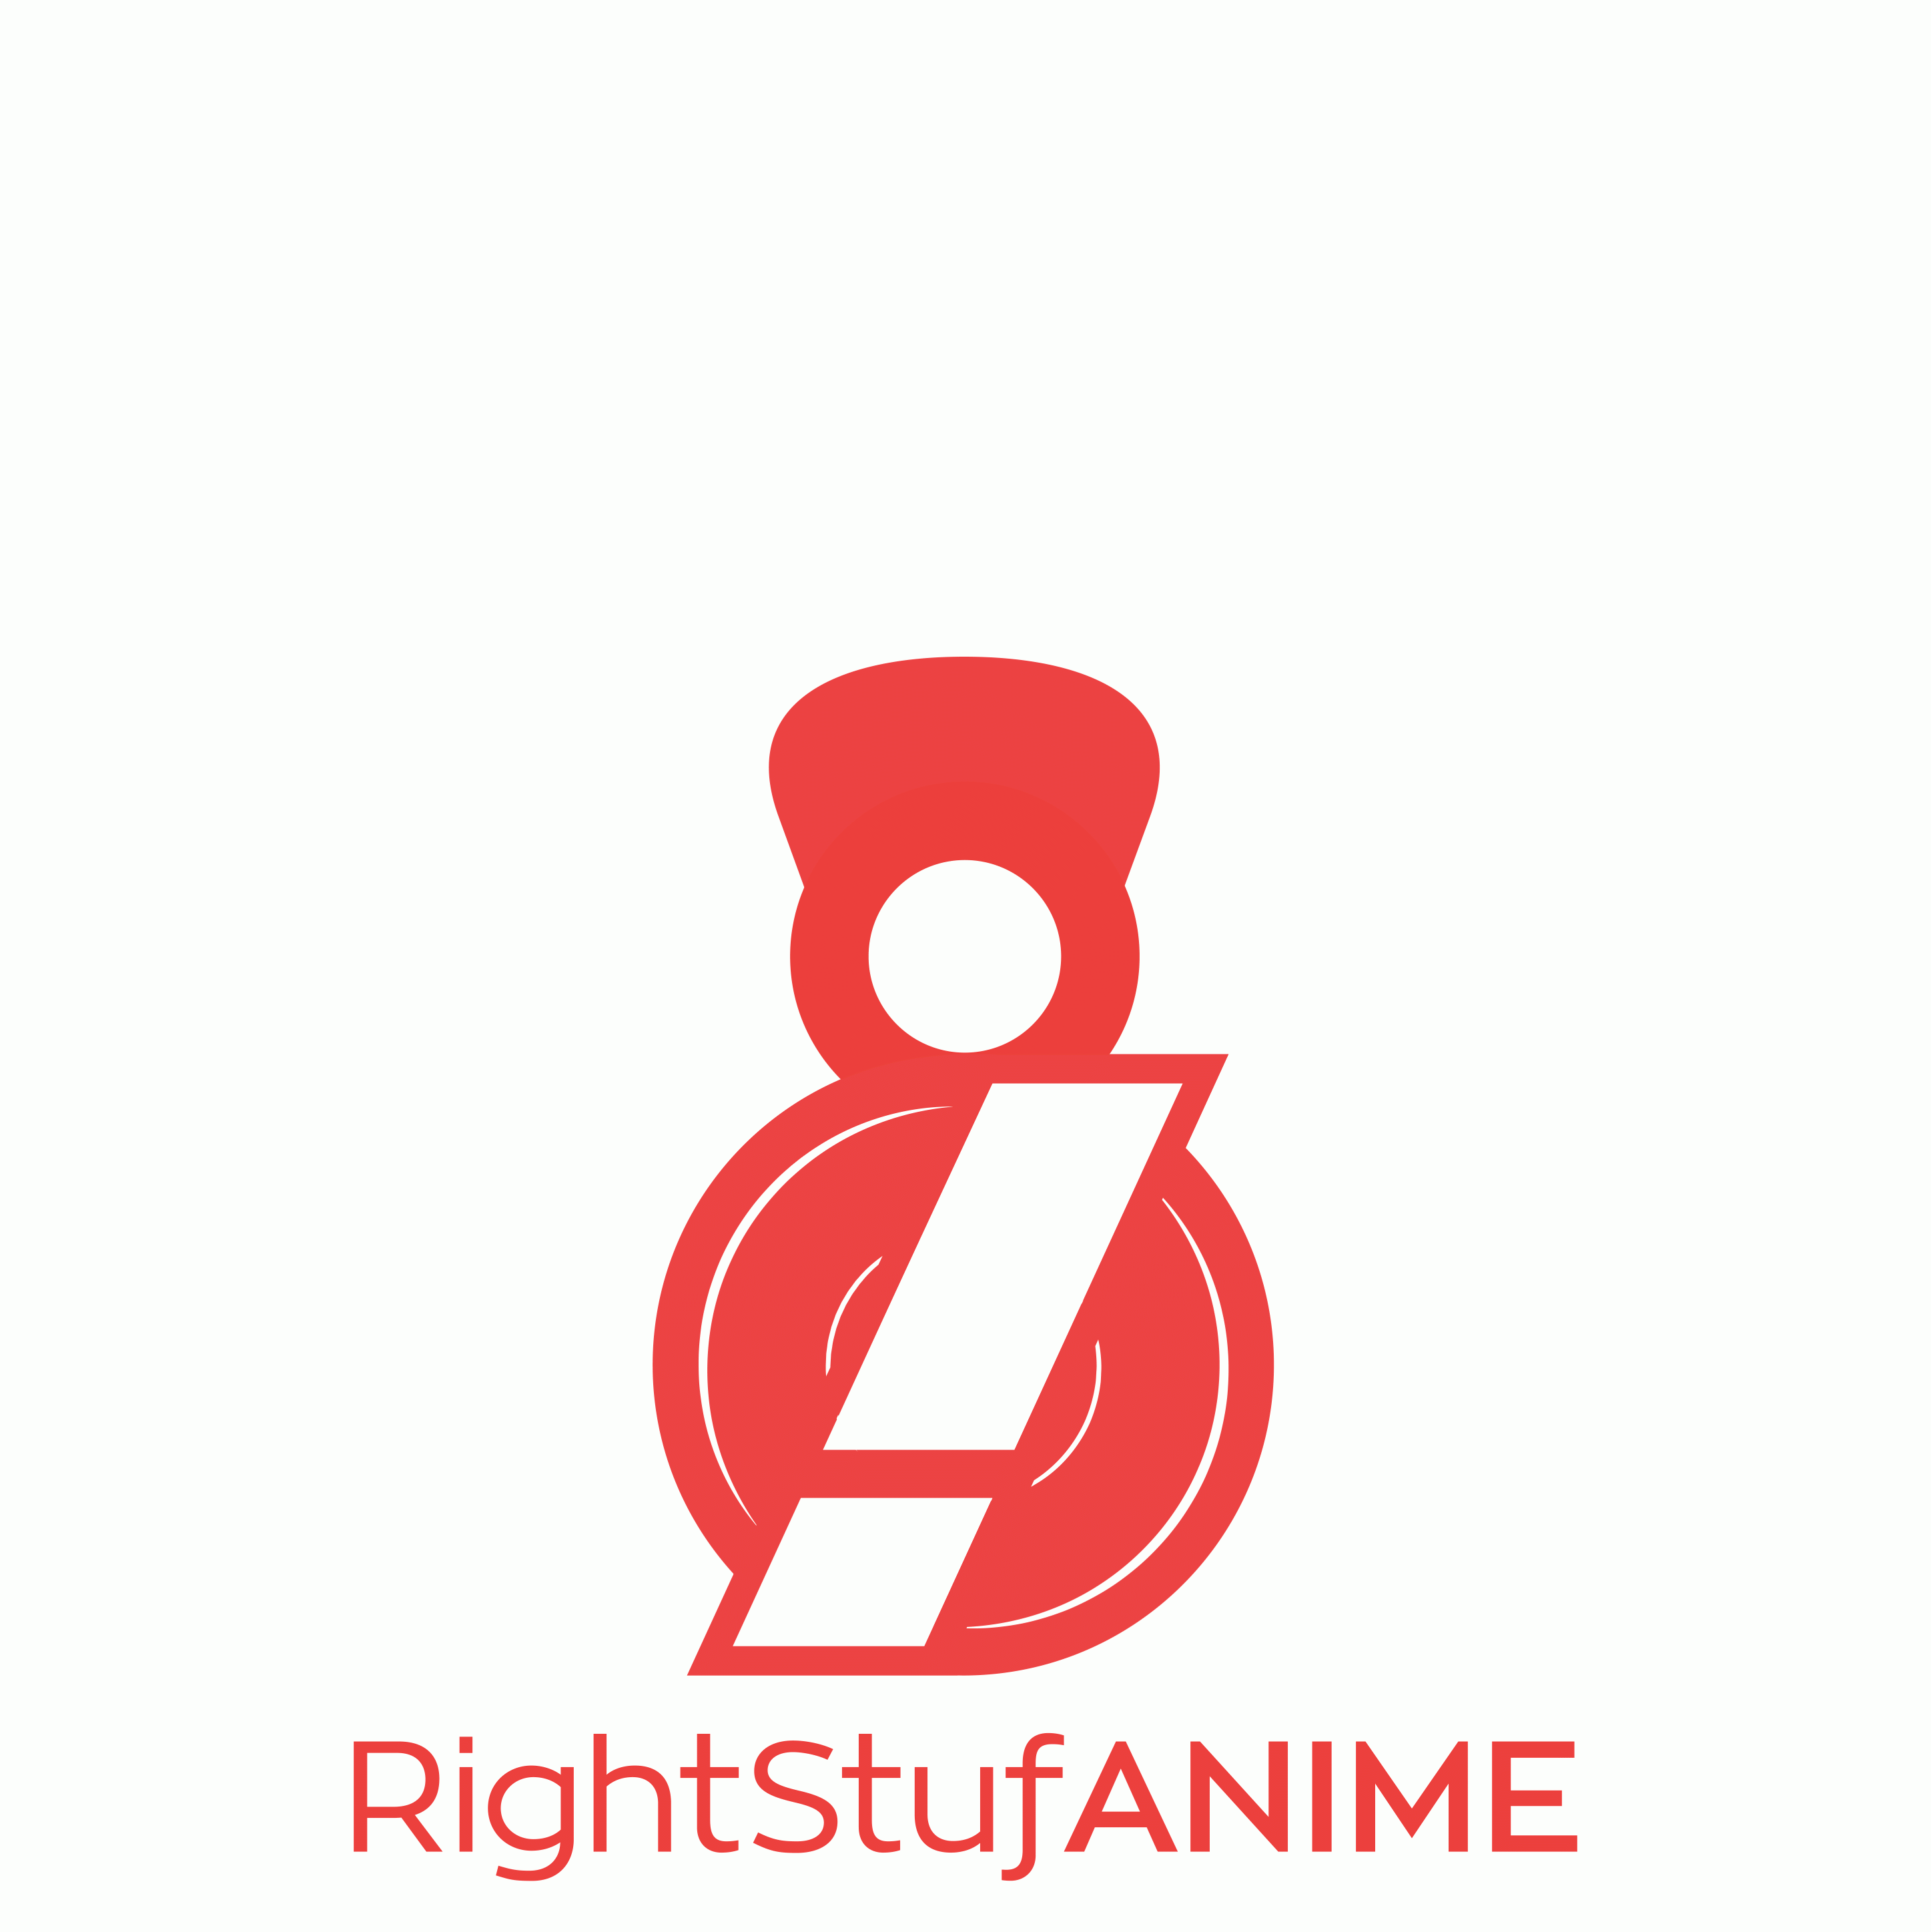 Crunchyroll x Right Stuf Anime, site de anime crunchyroll - thirstymag.com